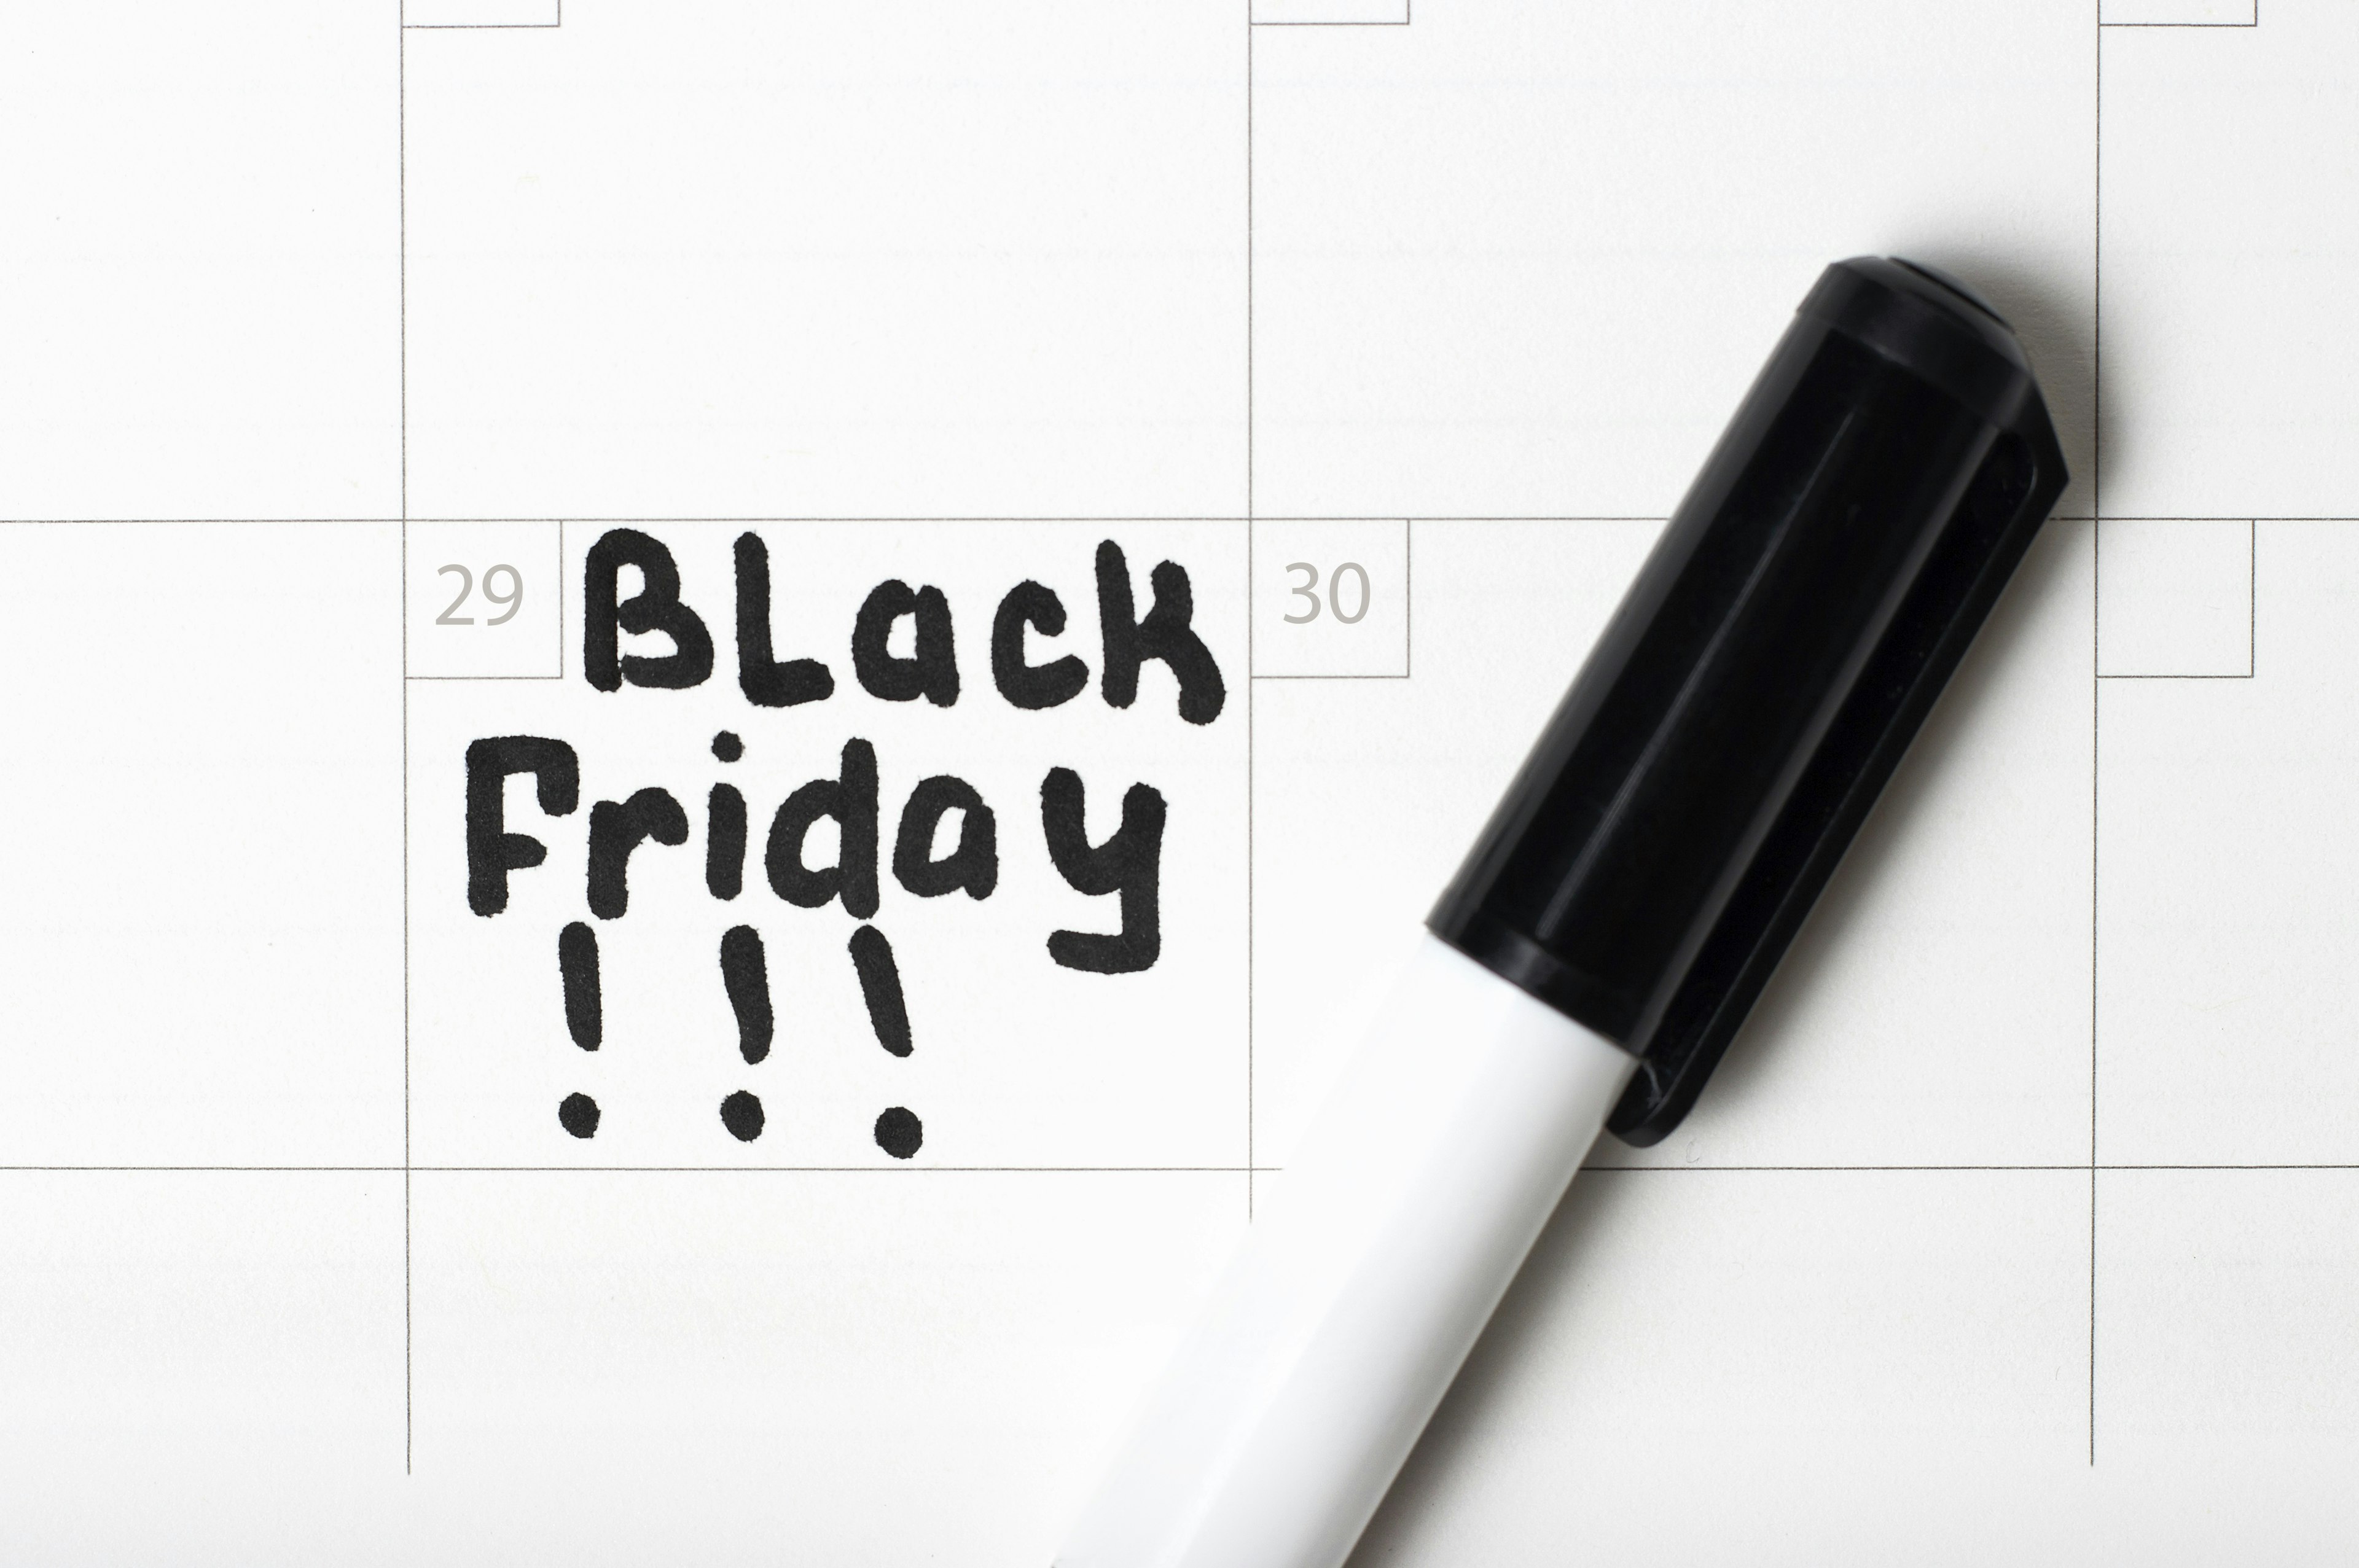 "Black Friday" written on a calendar with a marker